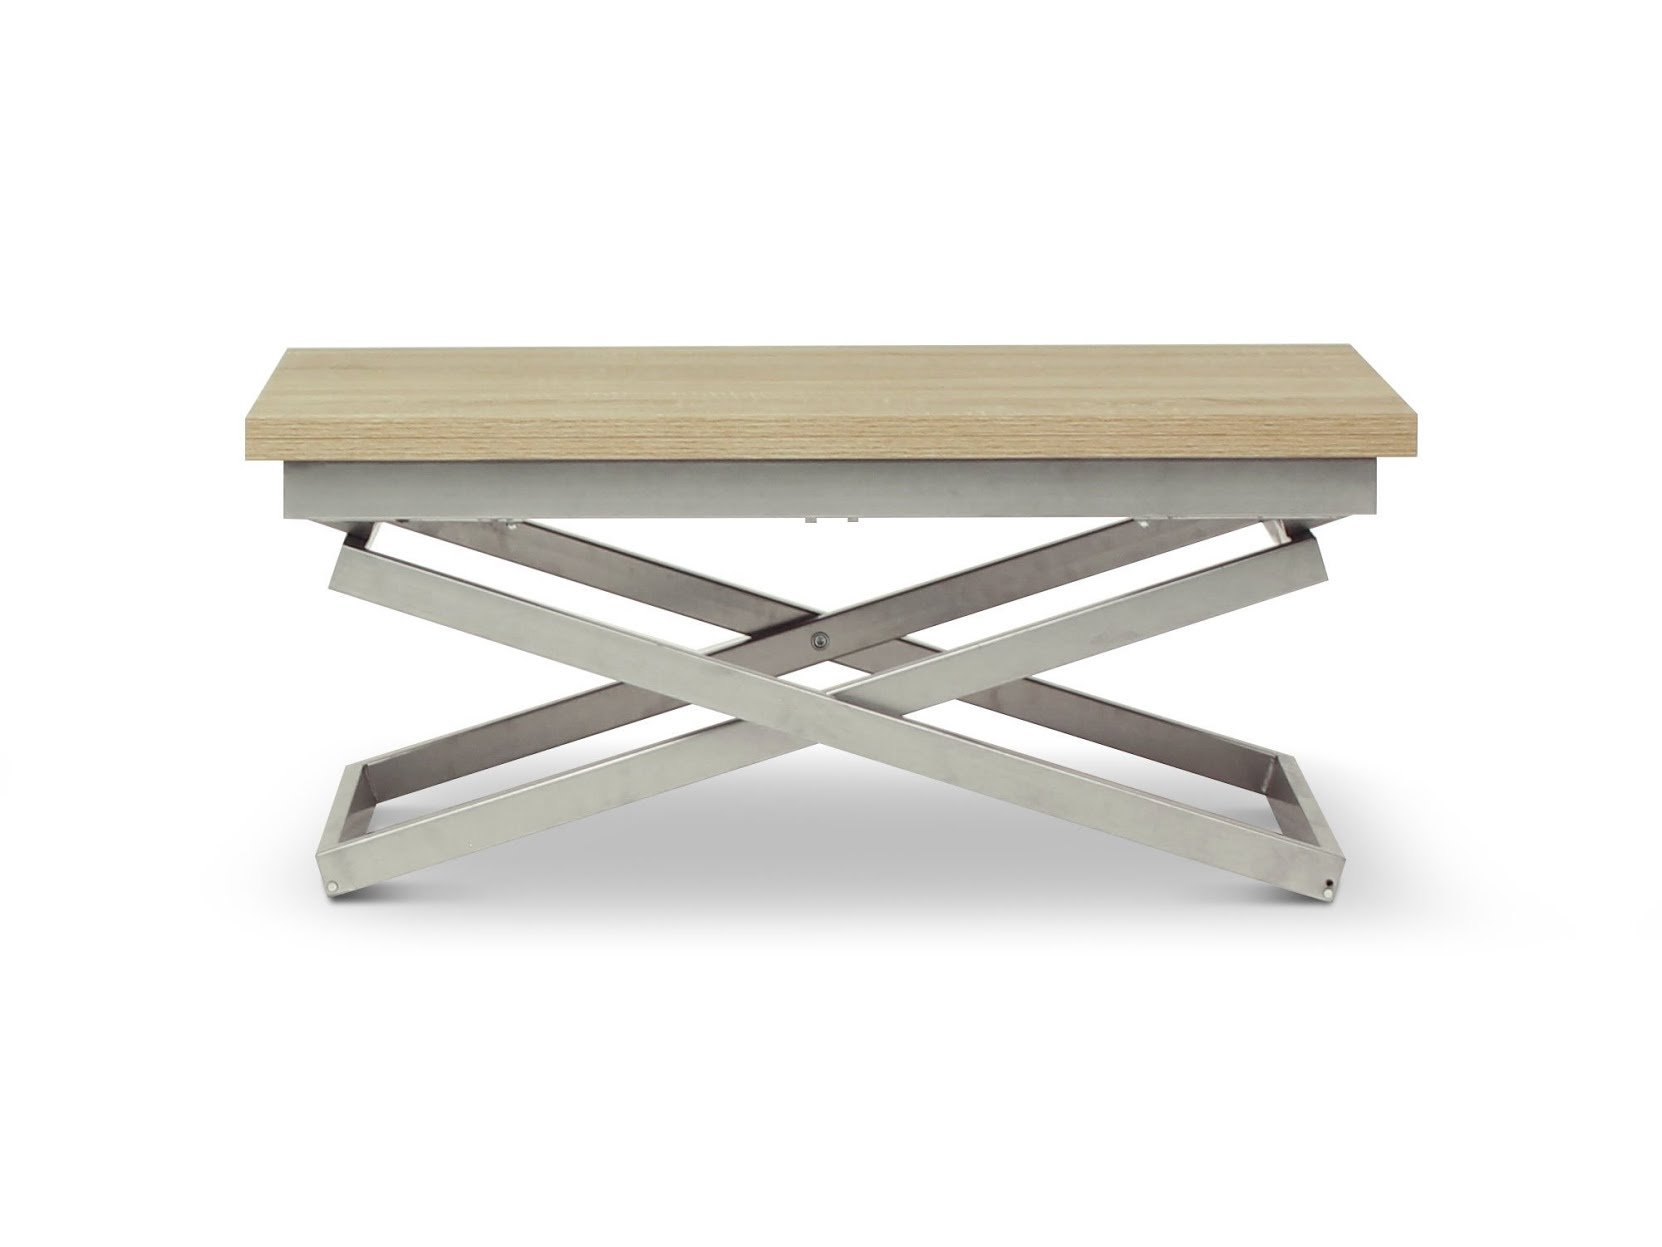 Size : 76×43cm Suitable For Bay Window Living Room 2 Sizes Sofa Breakfast Tray Table GYY ZDZ ZZ Folding Table Bamboo Folding Coffee Table Coffee Table